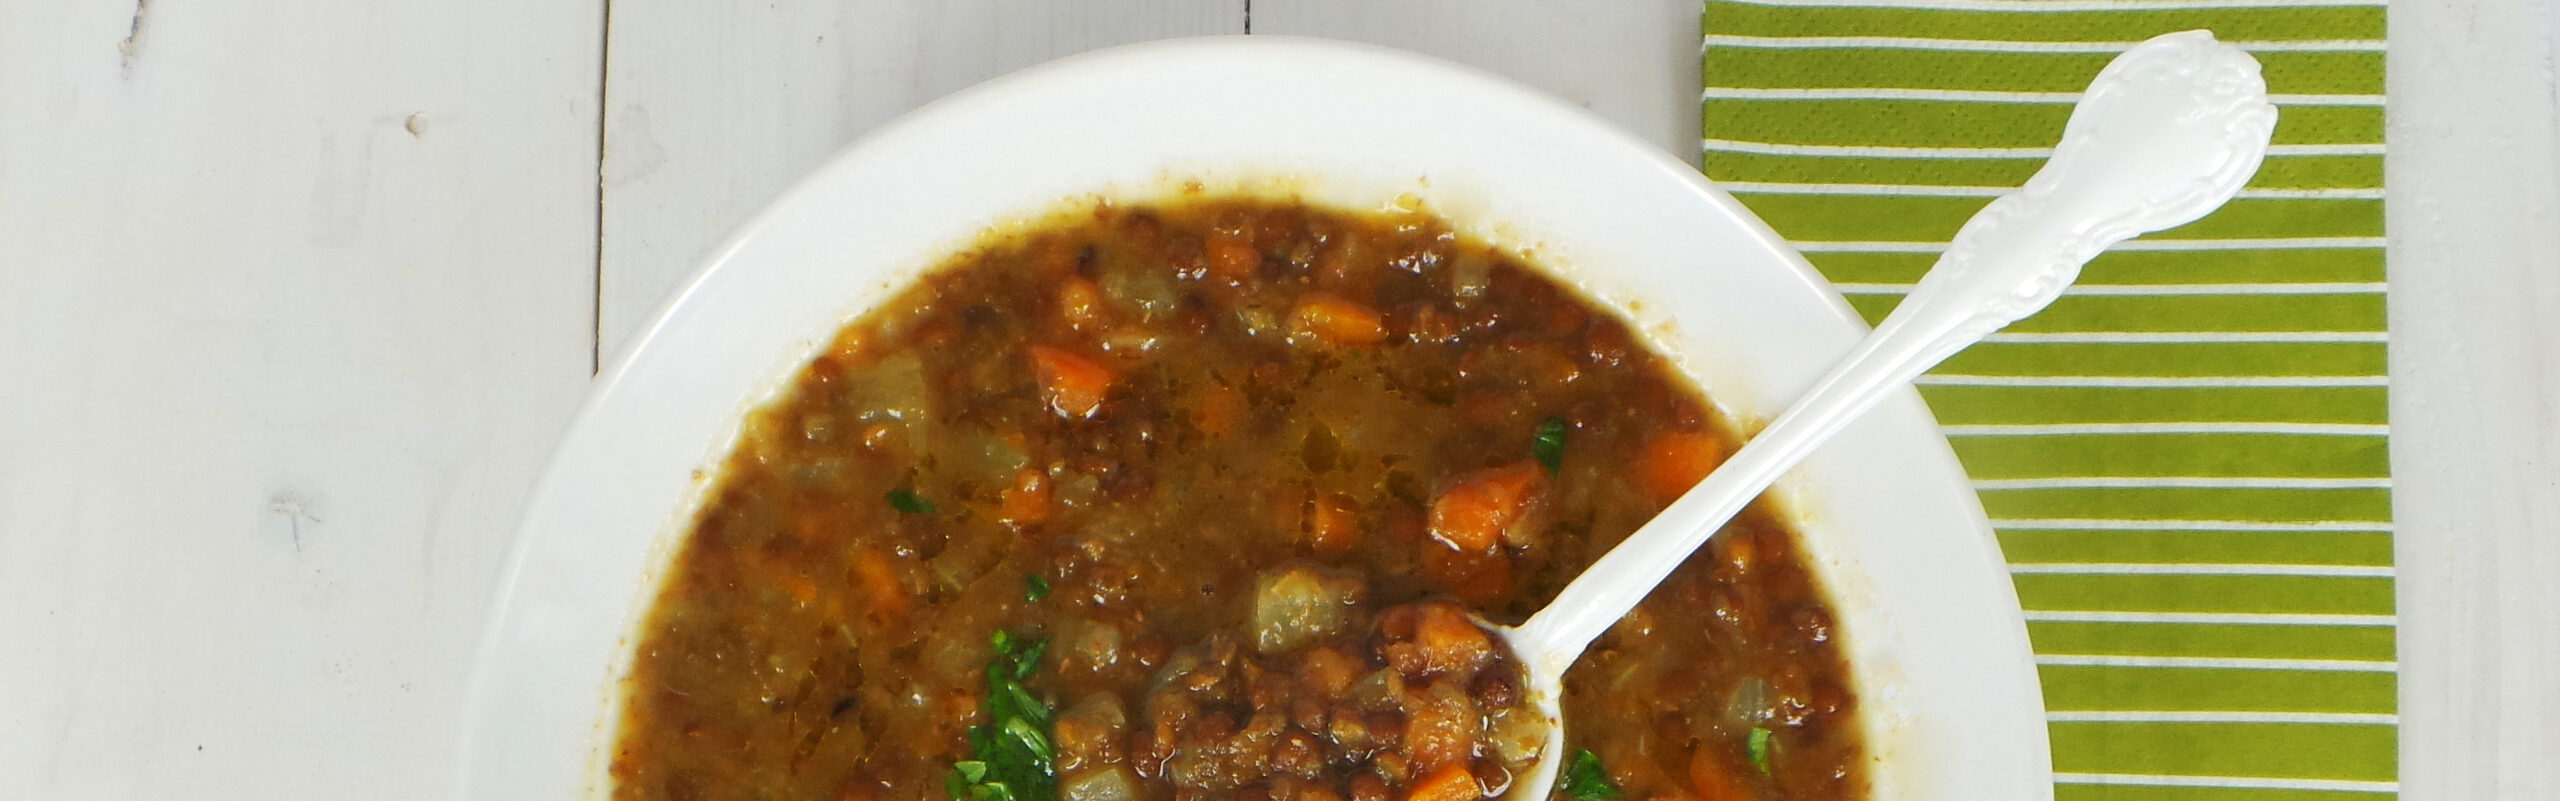 Ricette con legumi: minestra di lenticchie economica